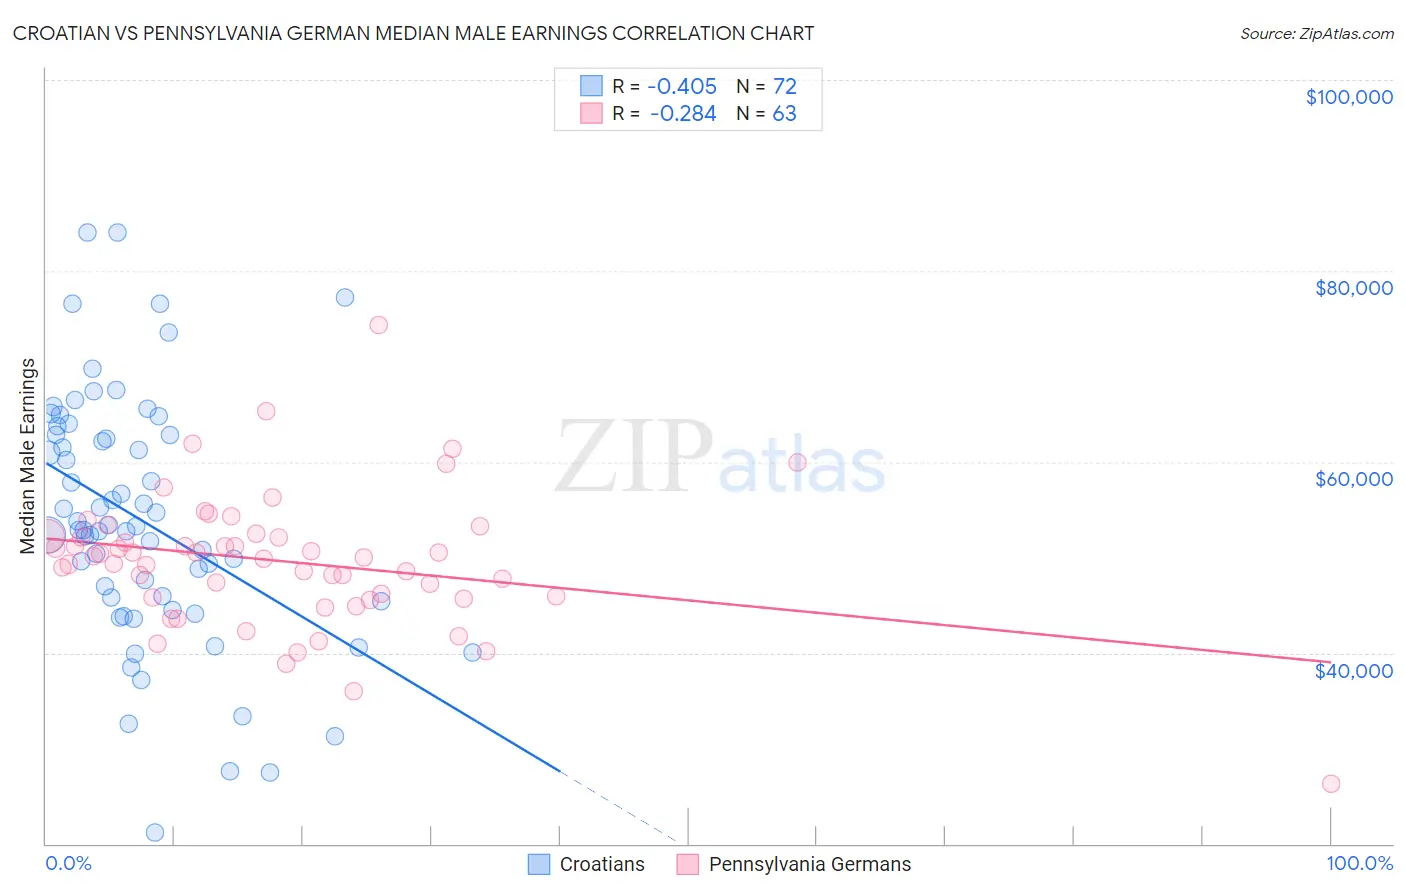 Croatian vs Pennsylvania German Median Male Earnings